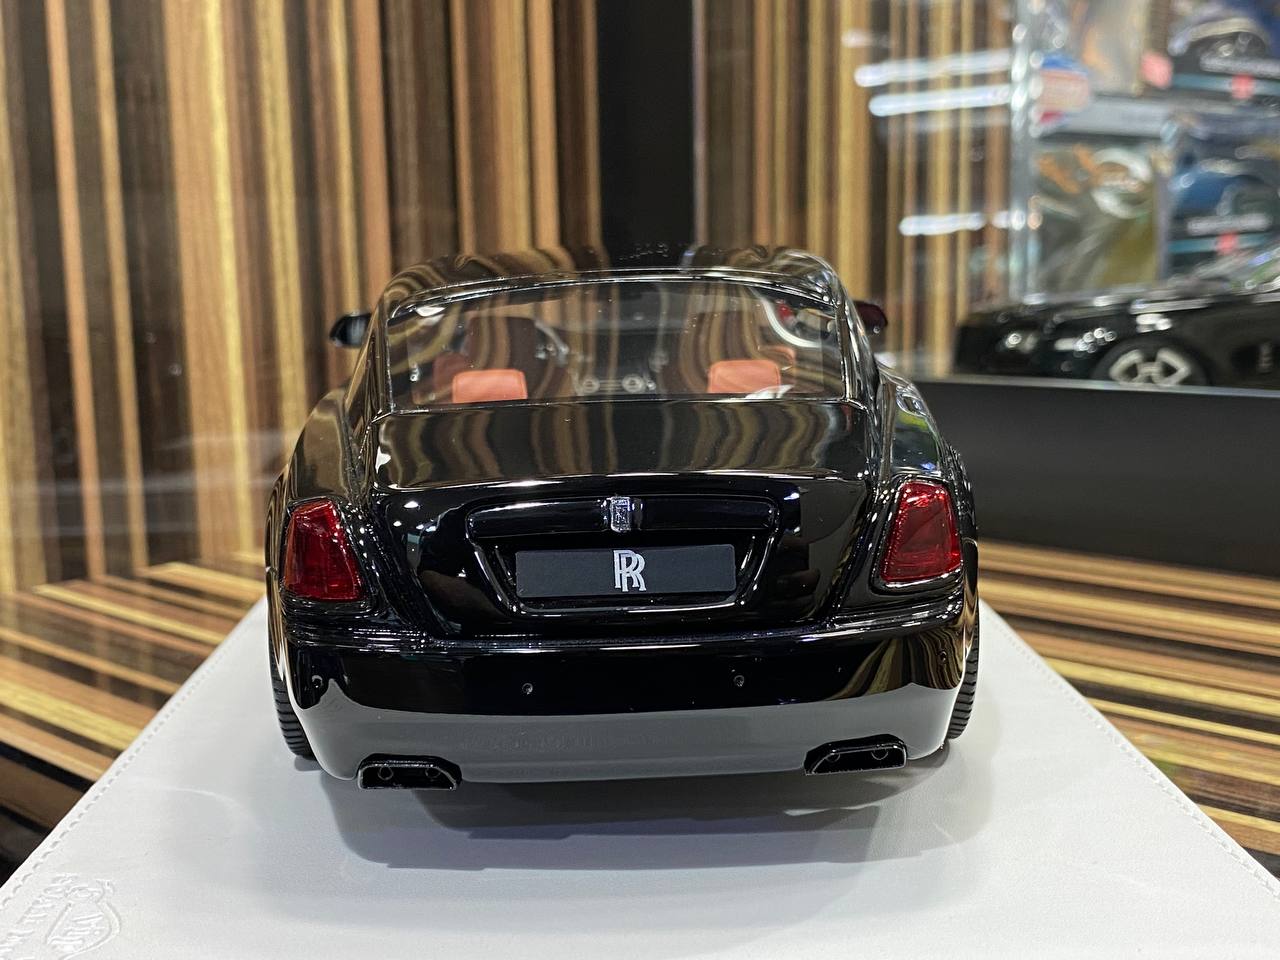 Rolls-Royce Wraith VIP Models